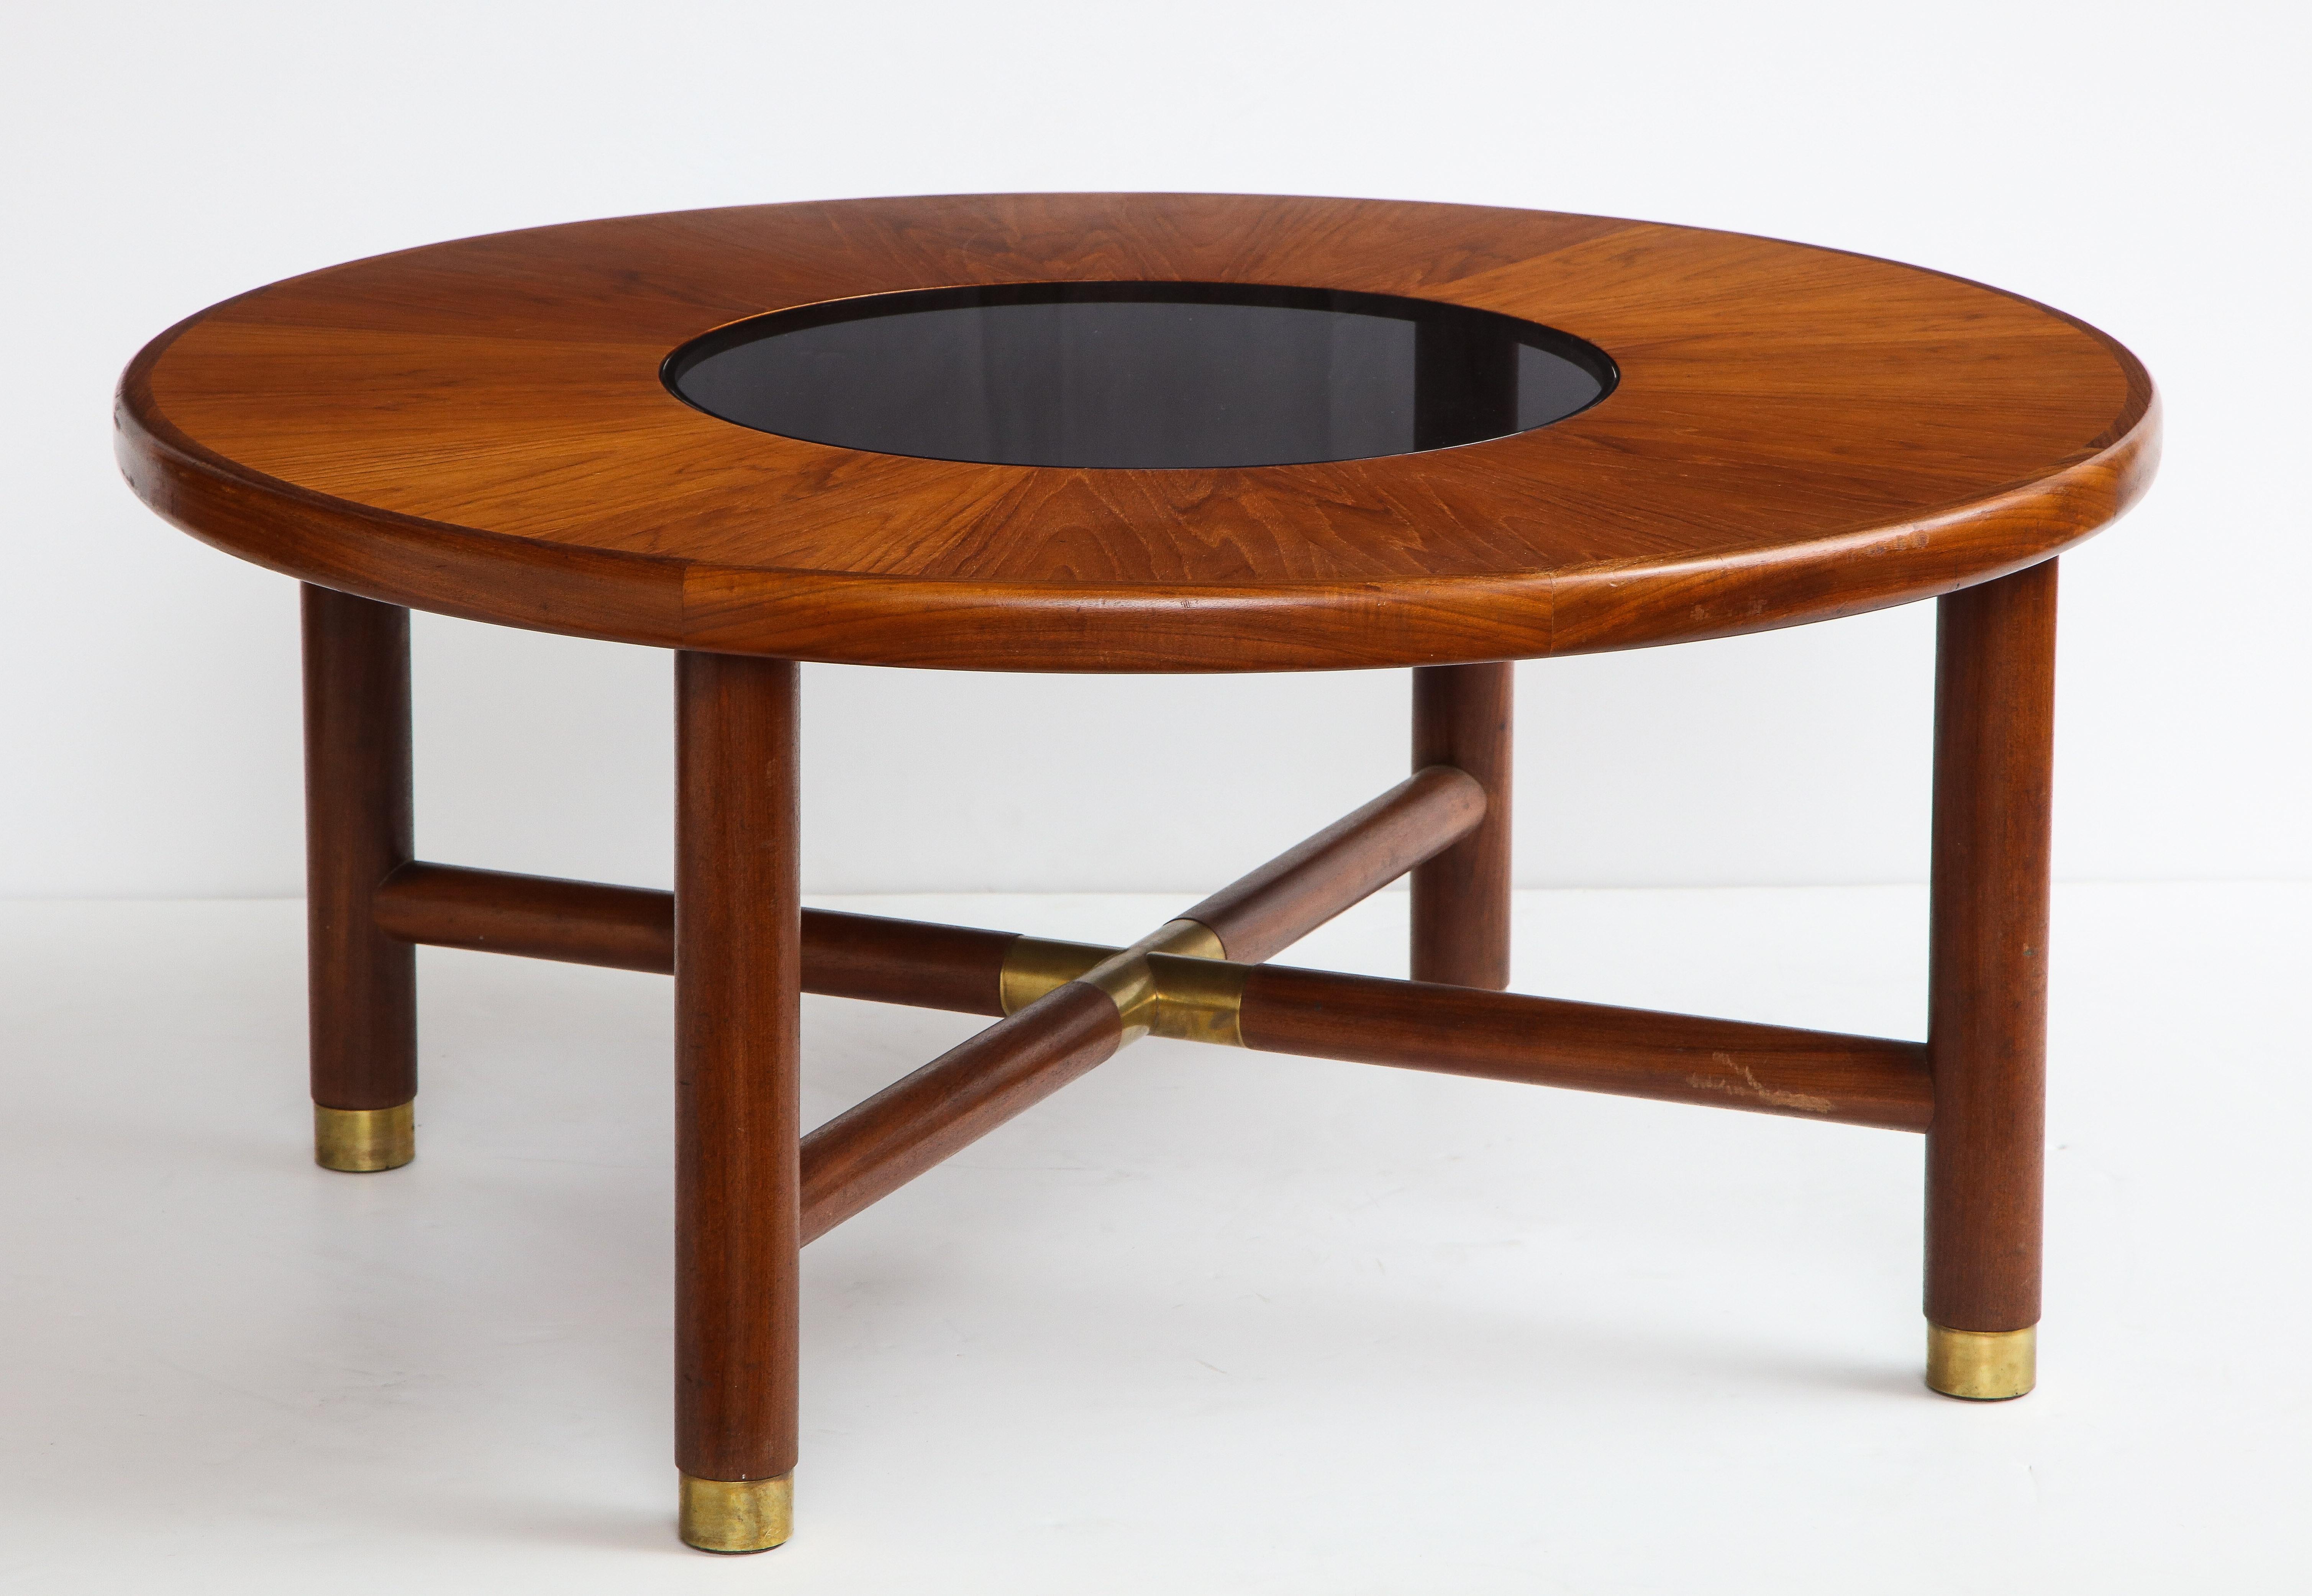 Veneer Midcentury Round Teak and Smoked Glass Coffee Table by G-Plan, U.K. 1960s For Sale